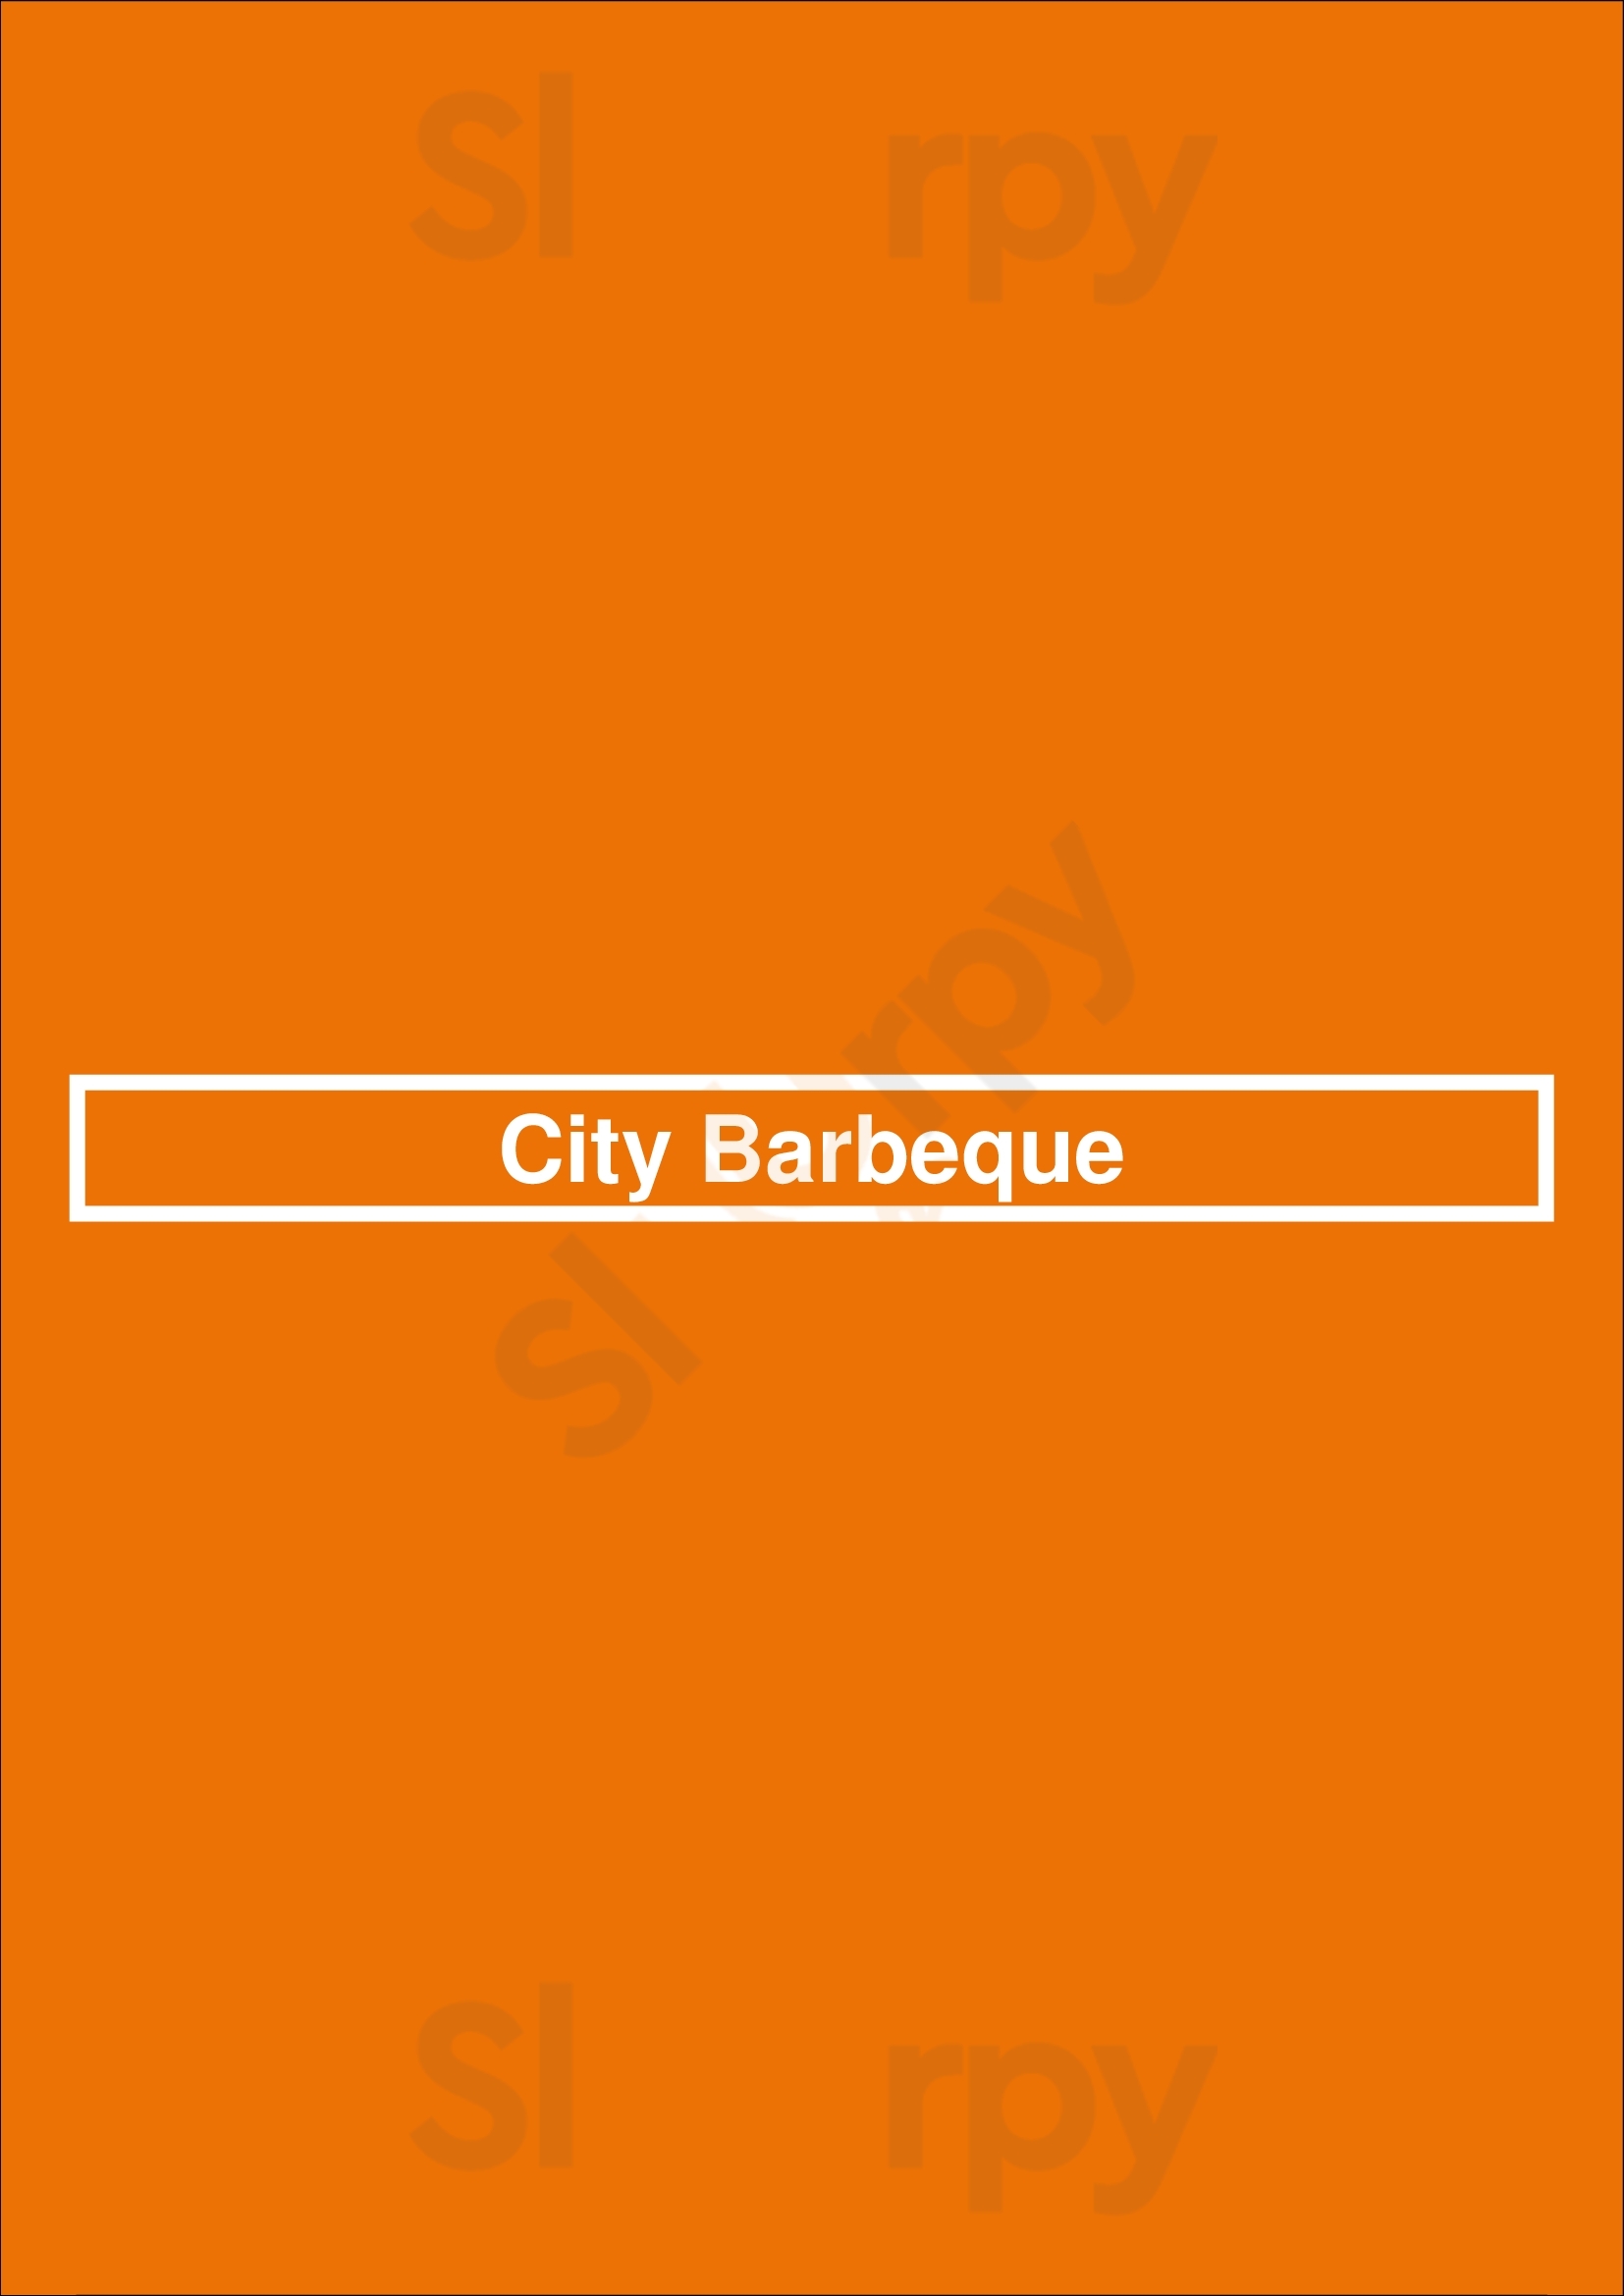 City Barbeque Indianapolis Menu - 1